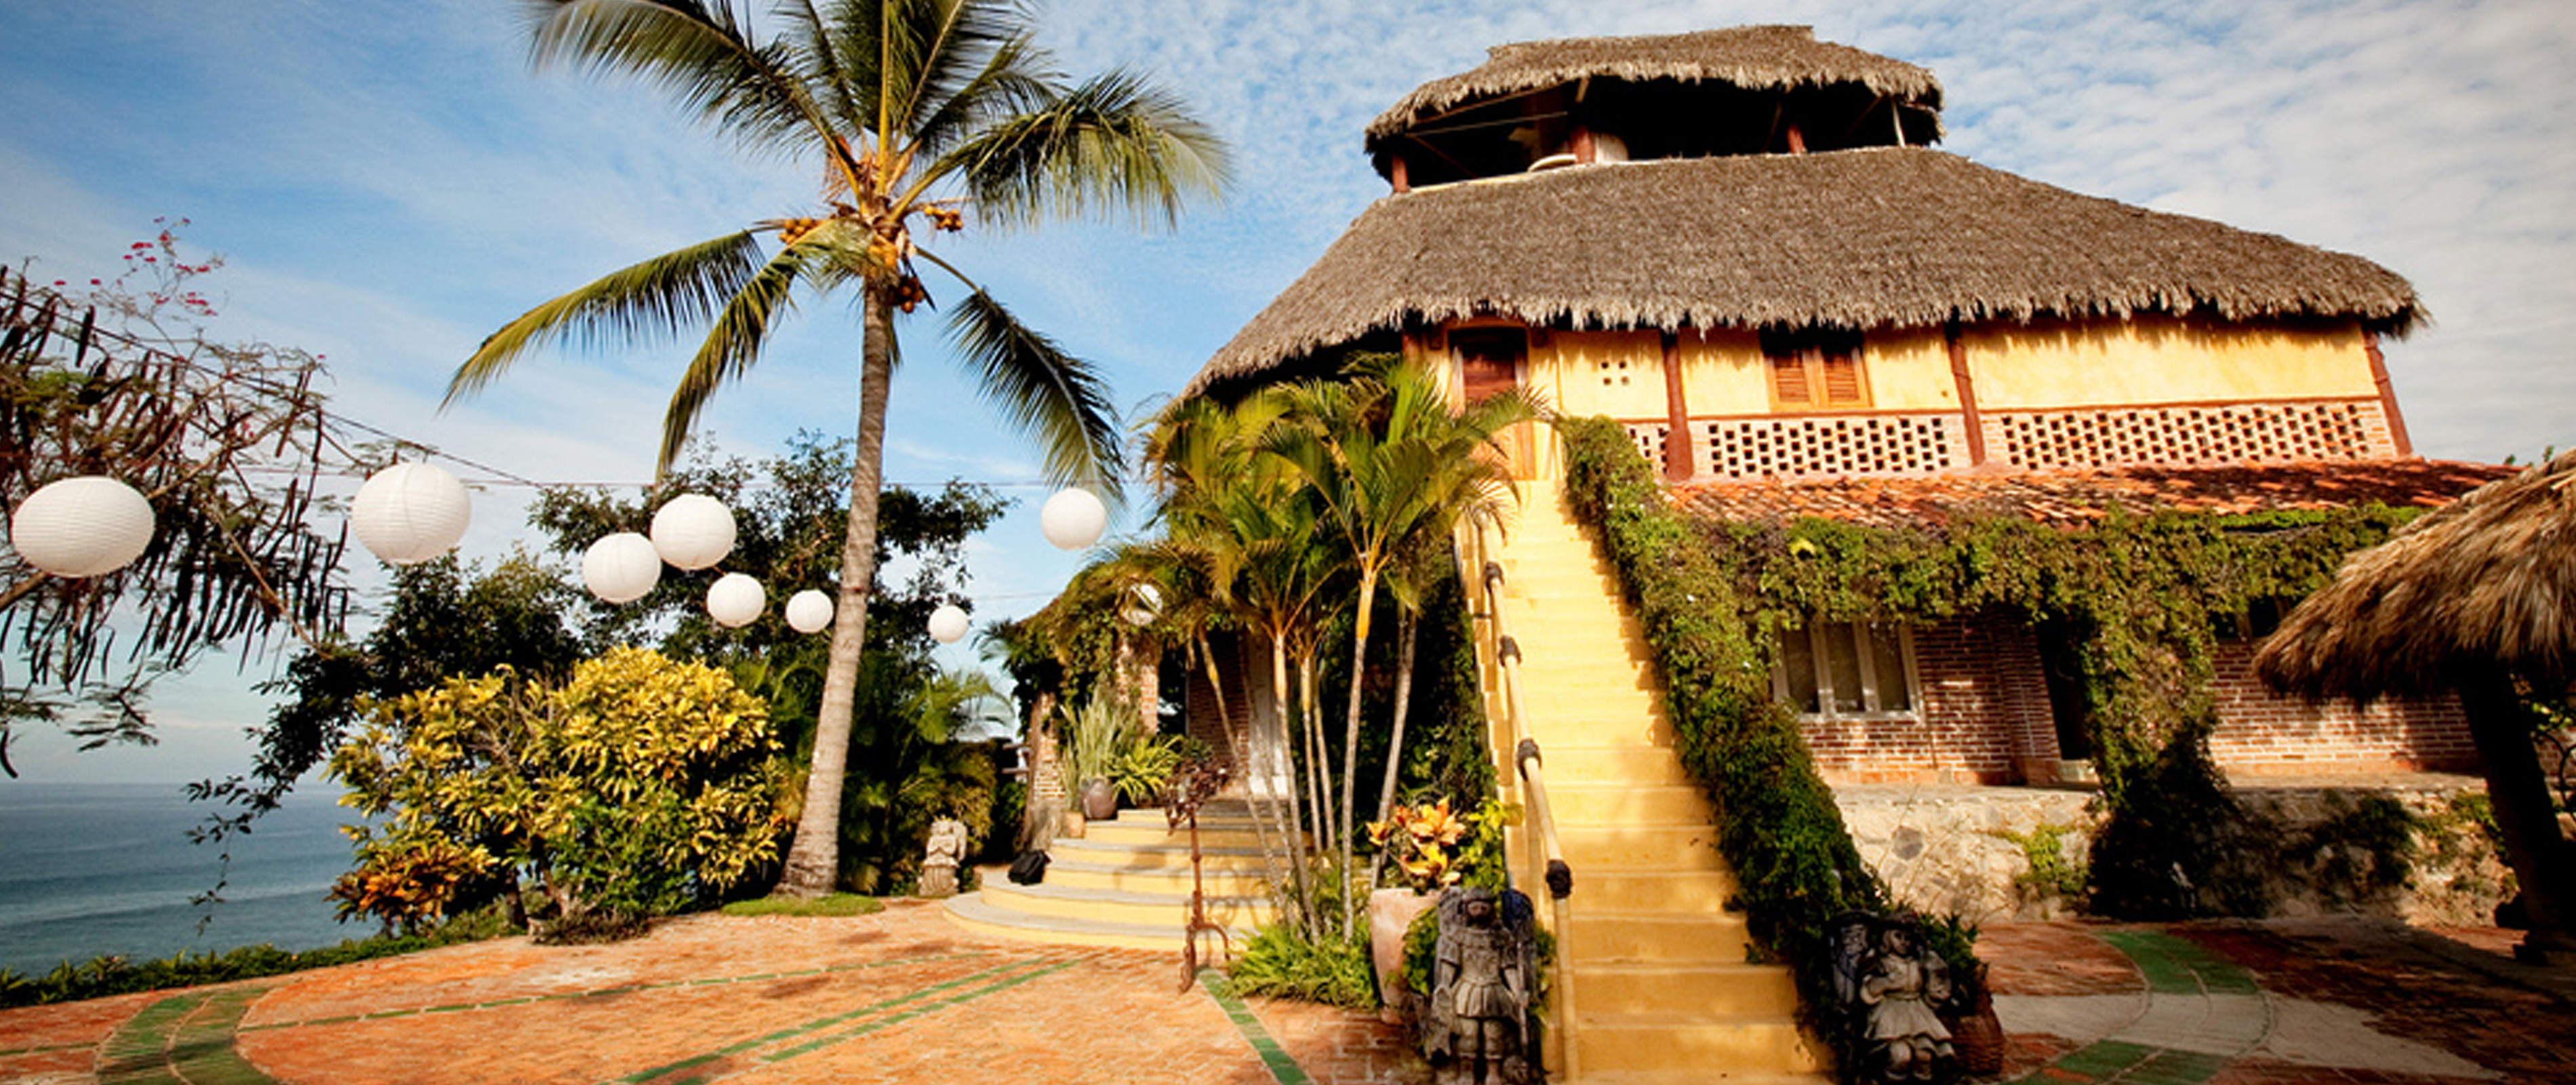 Destination-wedding-ready tropical bungalow